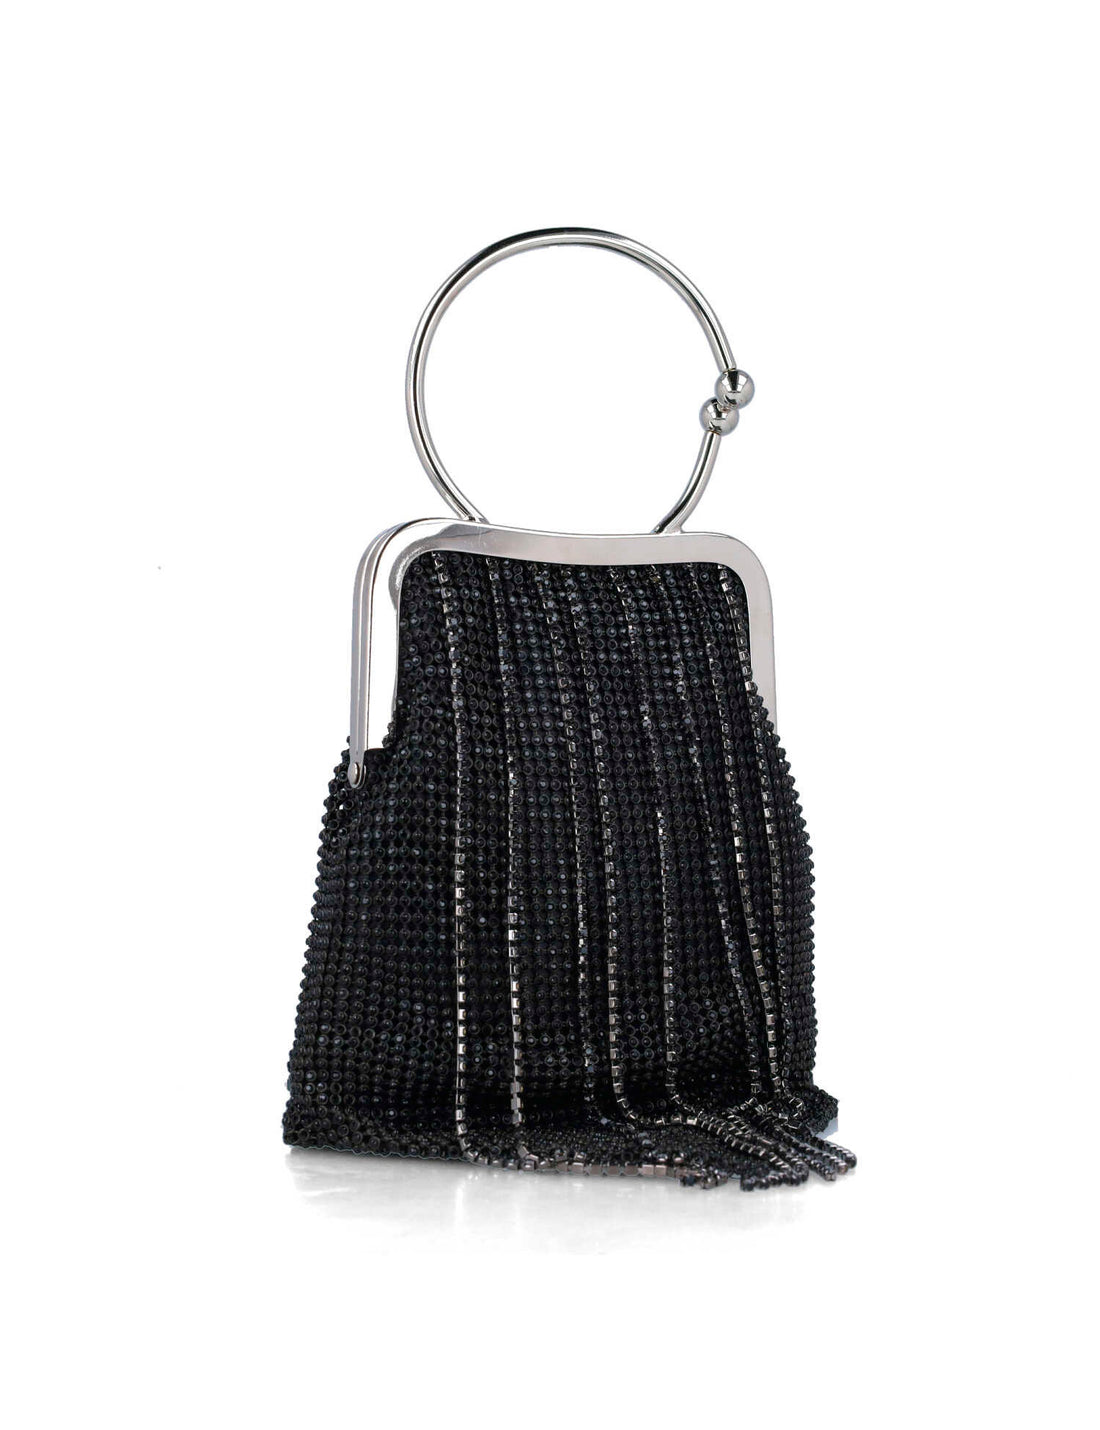 Embellished Handbag With Round Handles_85687_01_02